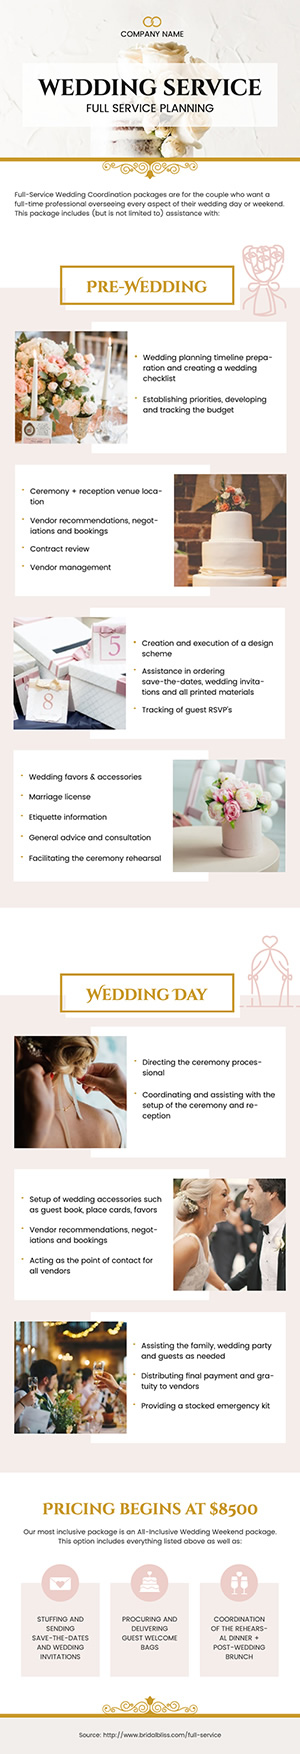 Wedding Service Infographic Design